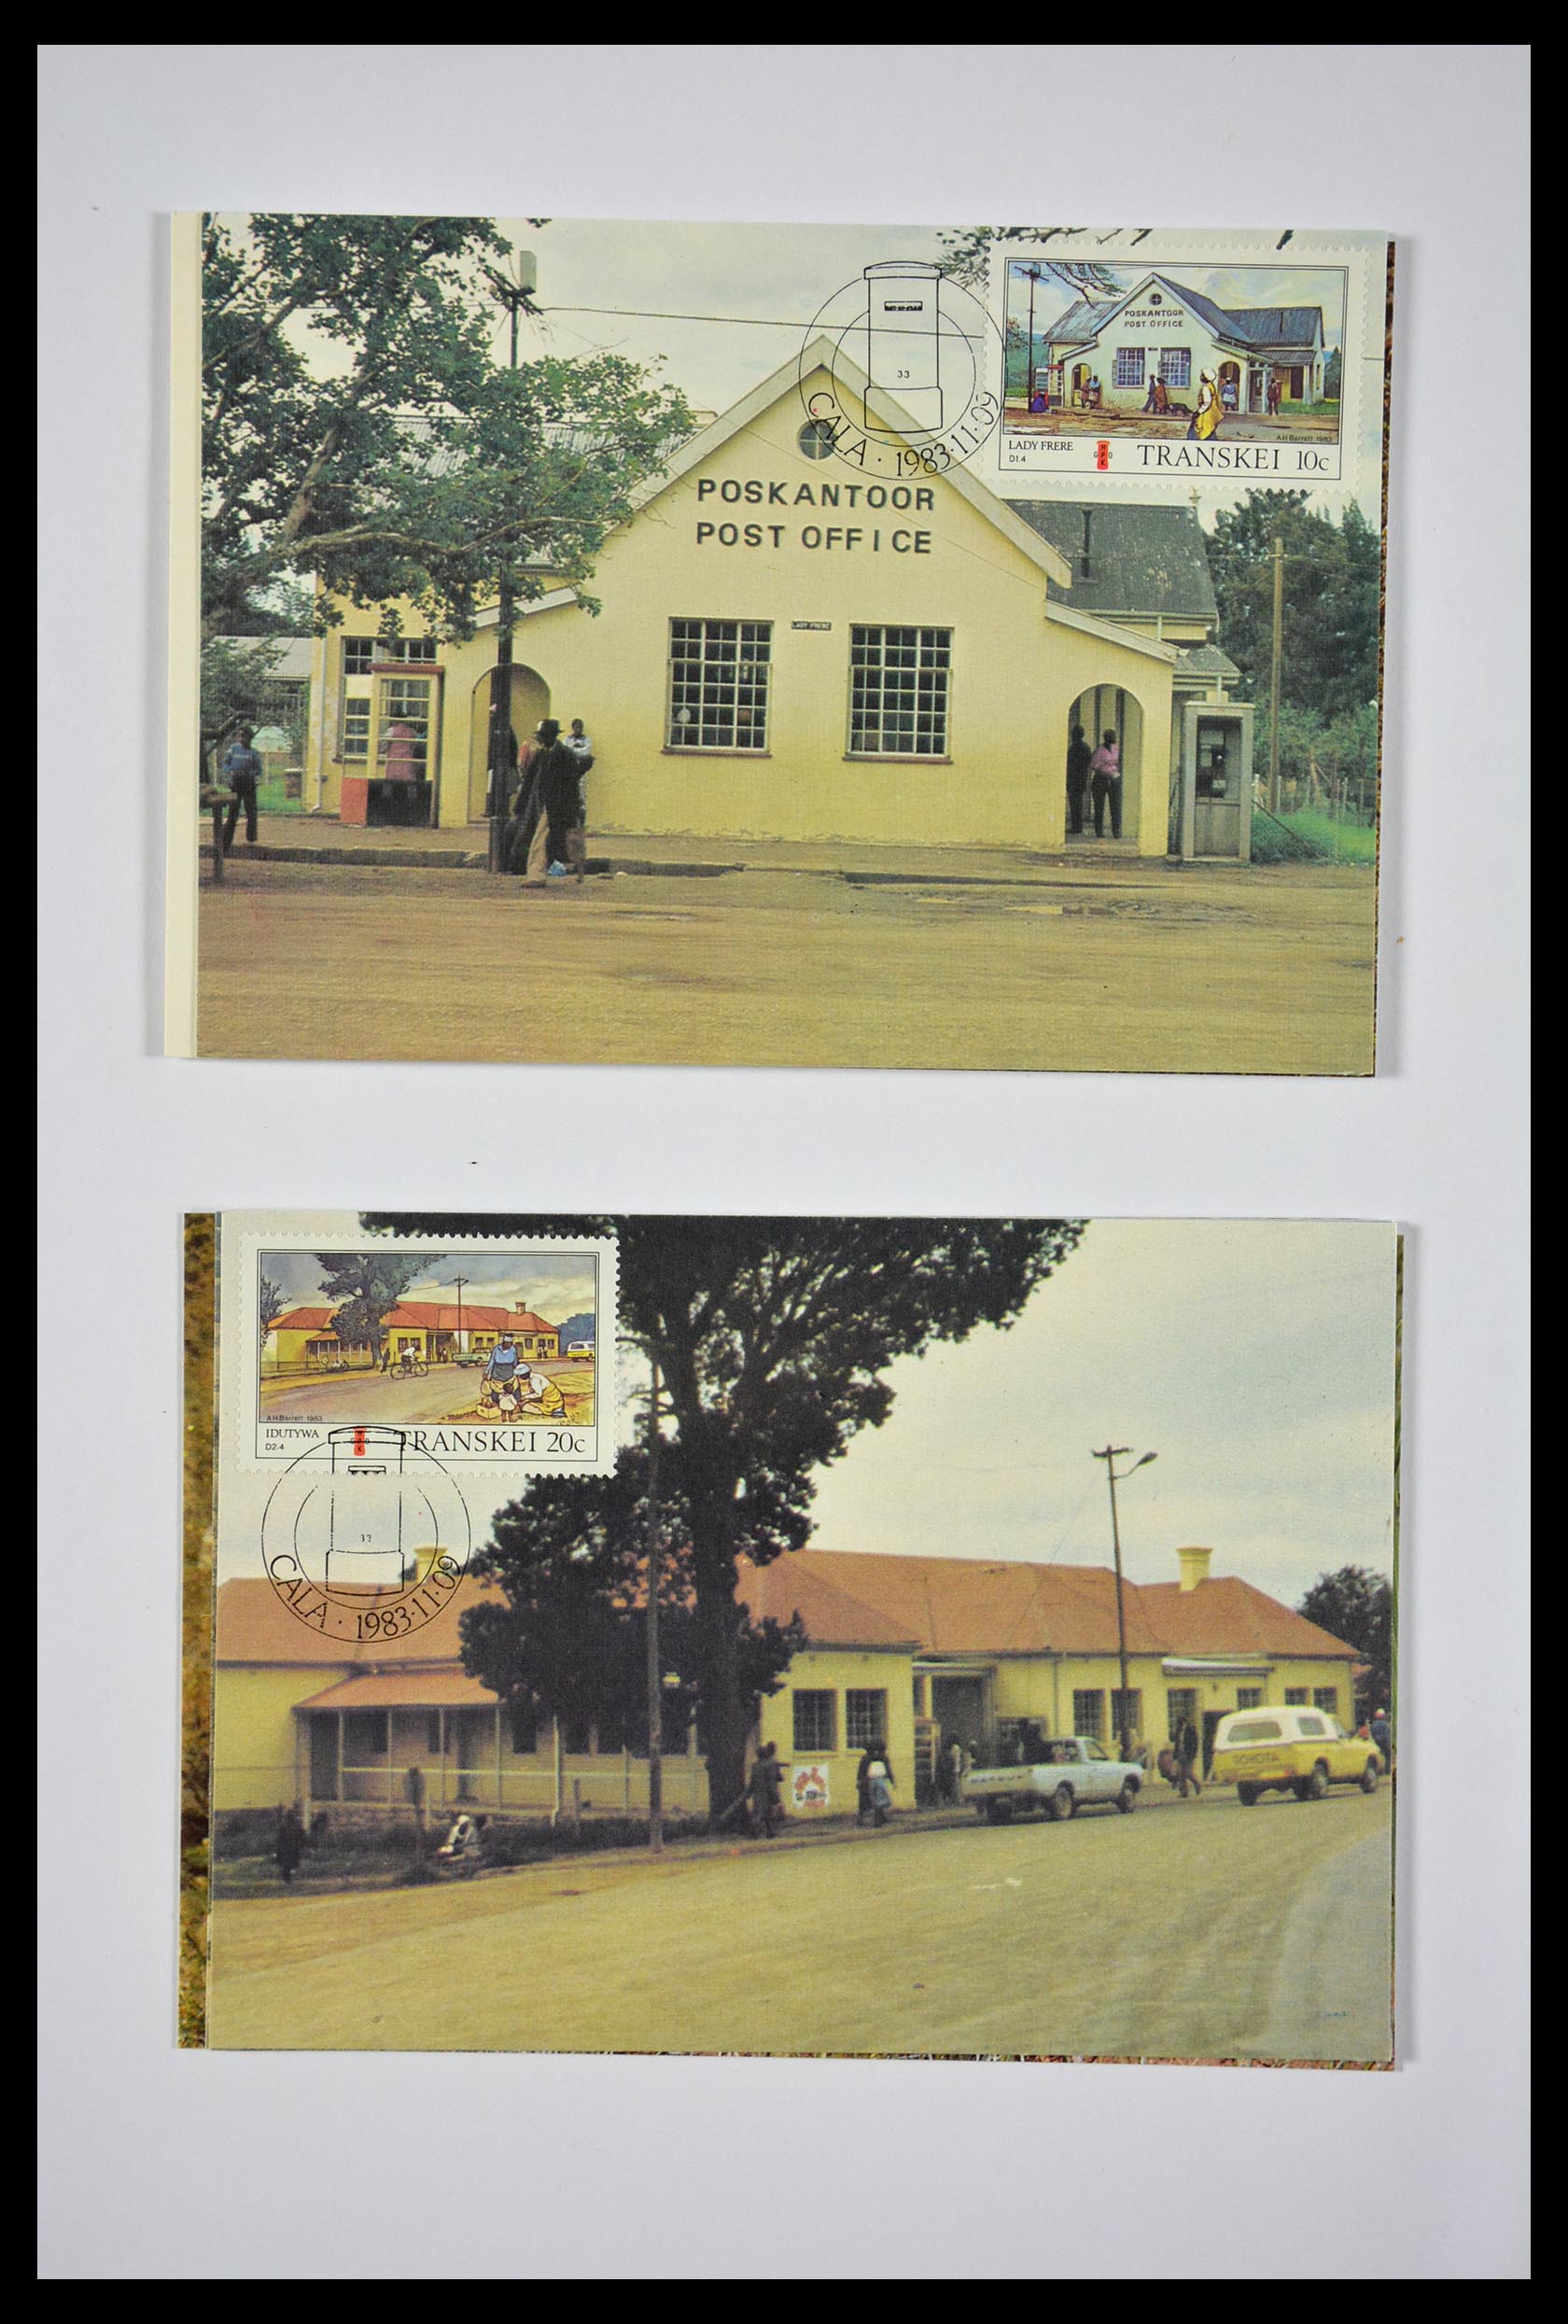 29356 290 - 29356 Zuid Afrika thuislanden fdc's 1979-1991.